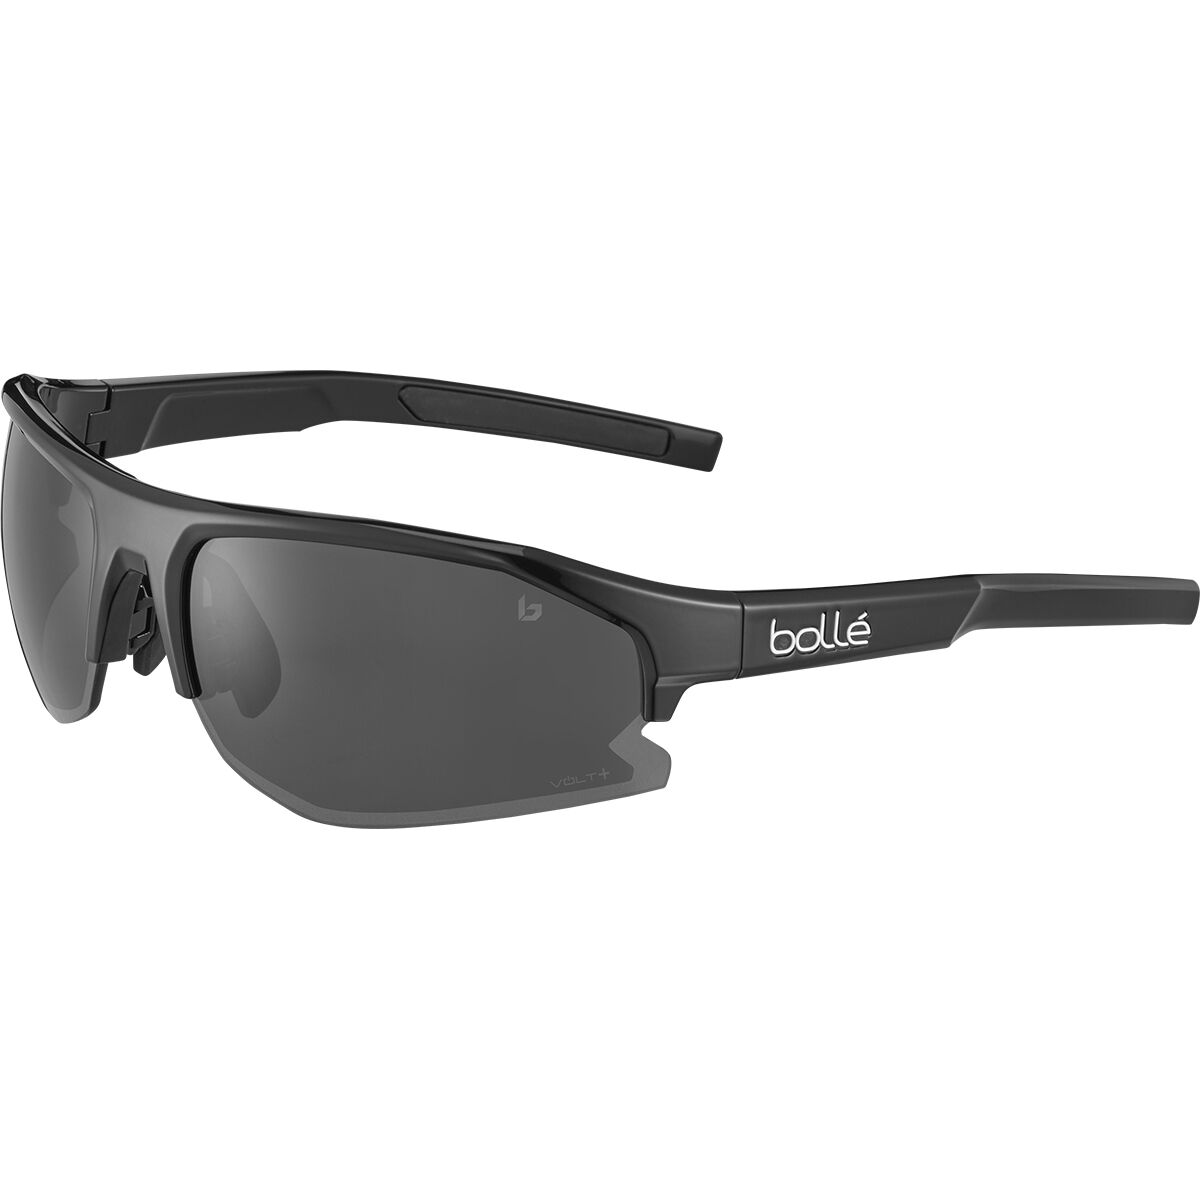 Bolle Bolt 2.0 Sunglasses  Bolt 2.0 Black Shiny - Tns One Size